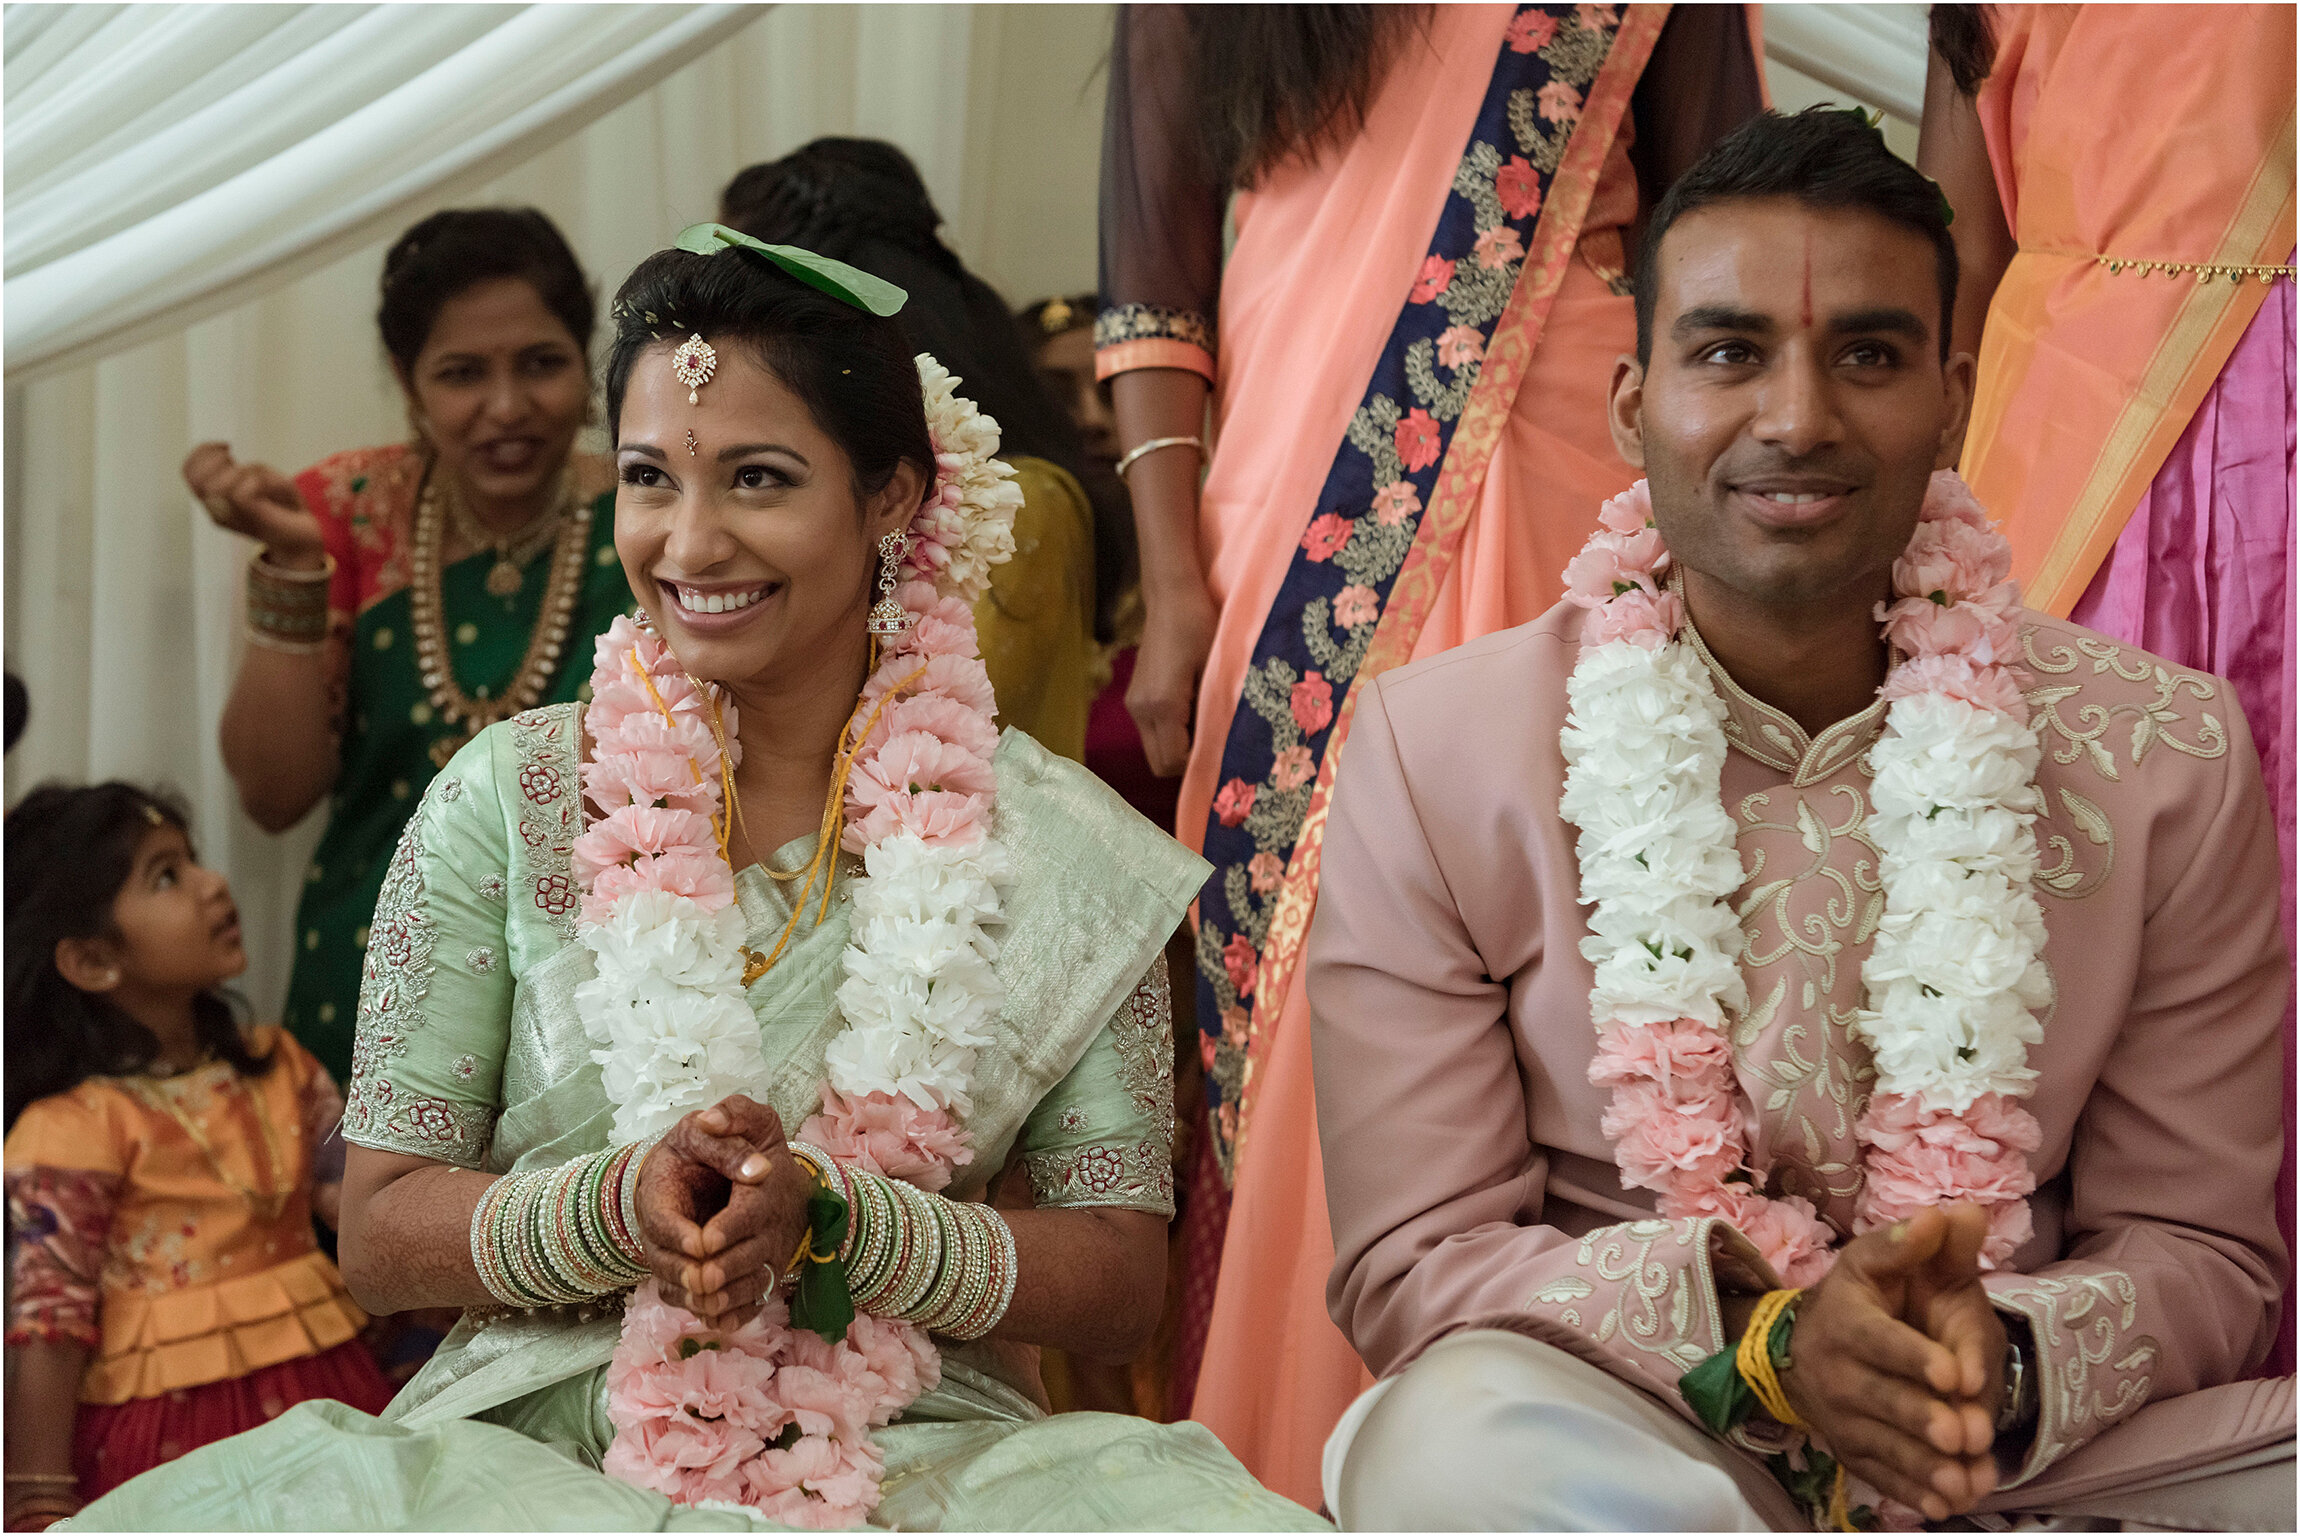 ©FianderFoto_Hindu Wedding_Bermuda_058.jpg